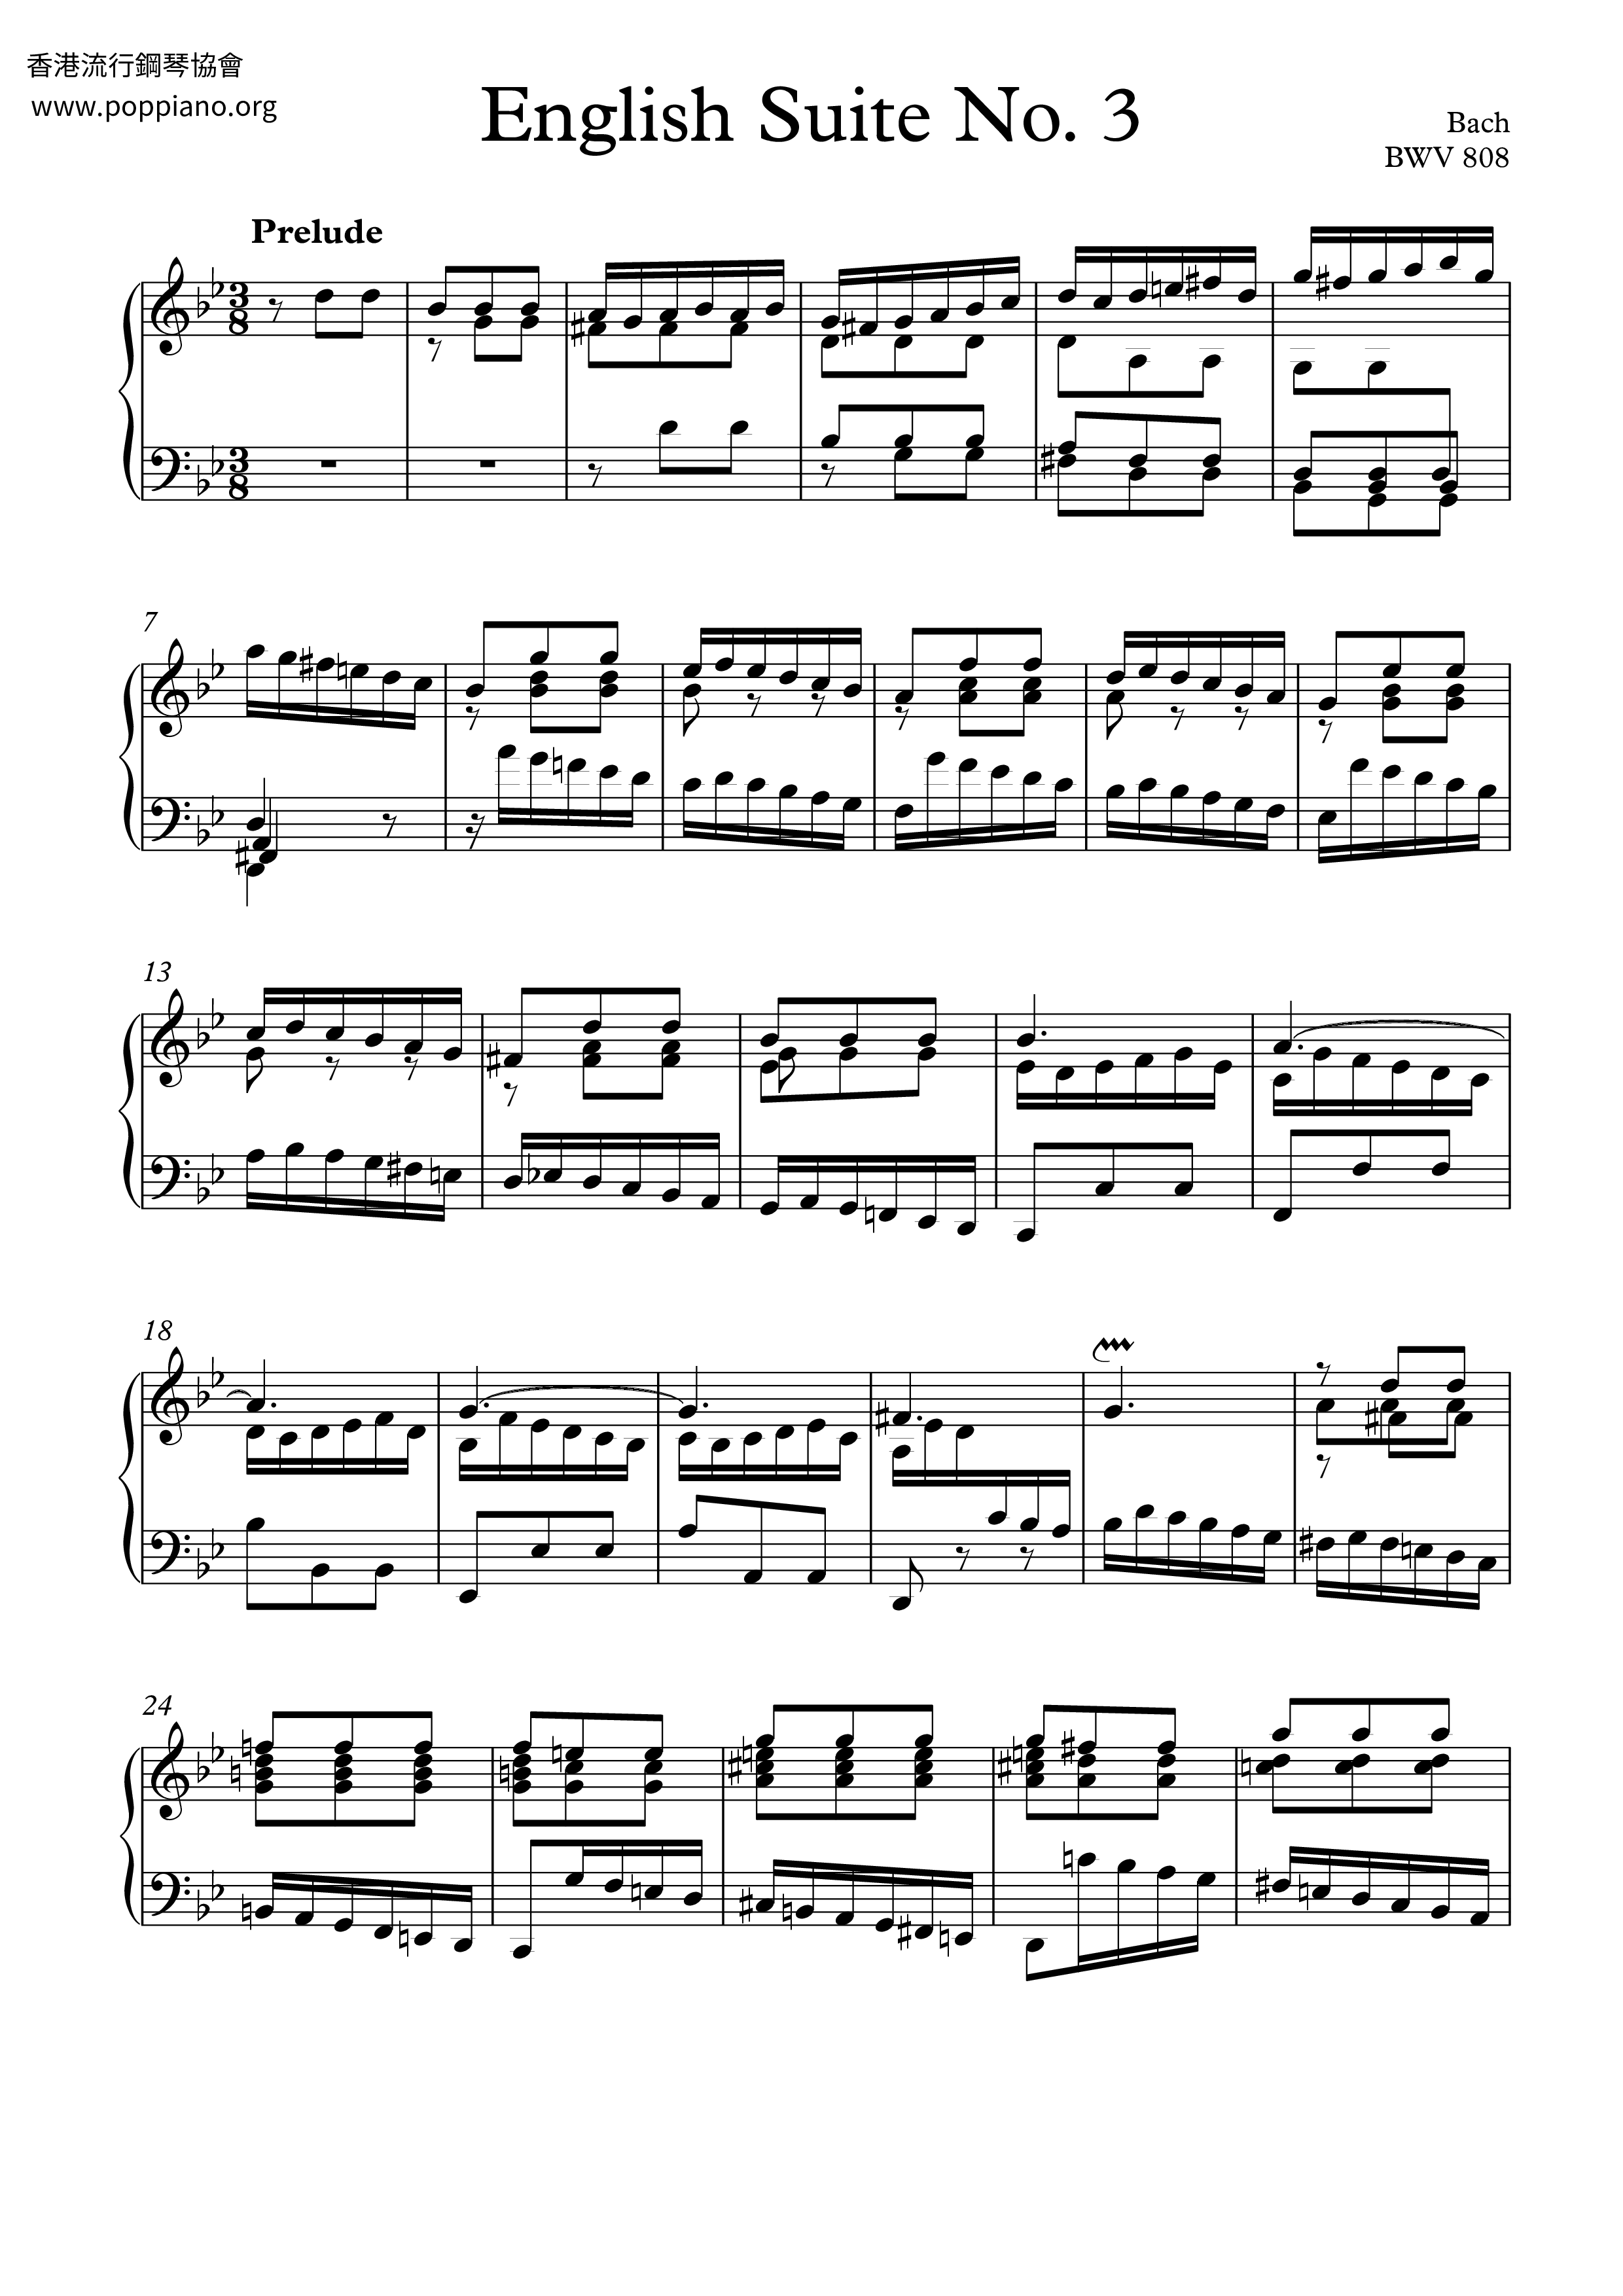 English Suite No. 3, BWV 808ピアノ譜